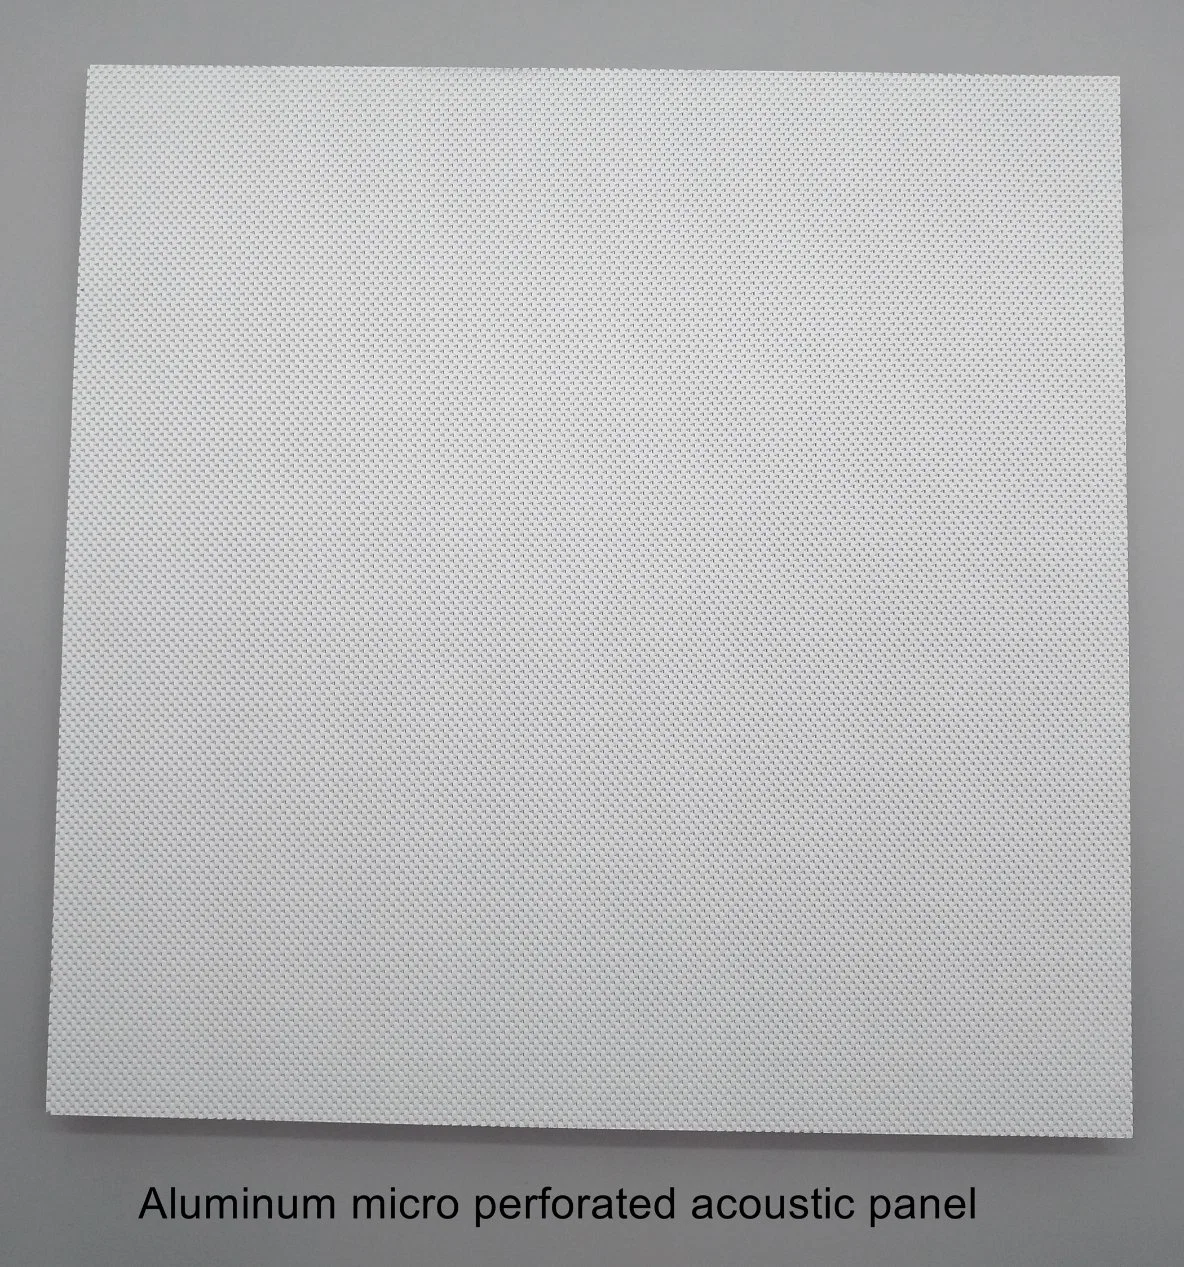 Chapa de madera incombustible aluminio Micro Perforated Acoustic Panel Interior decorado Material de construcción insonorizado